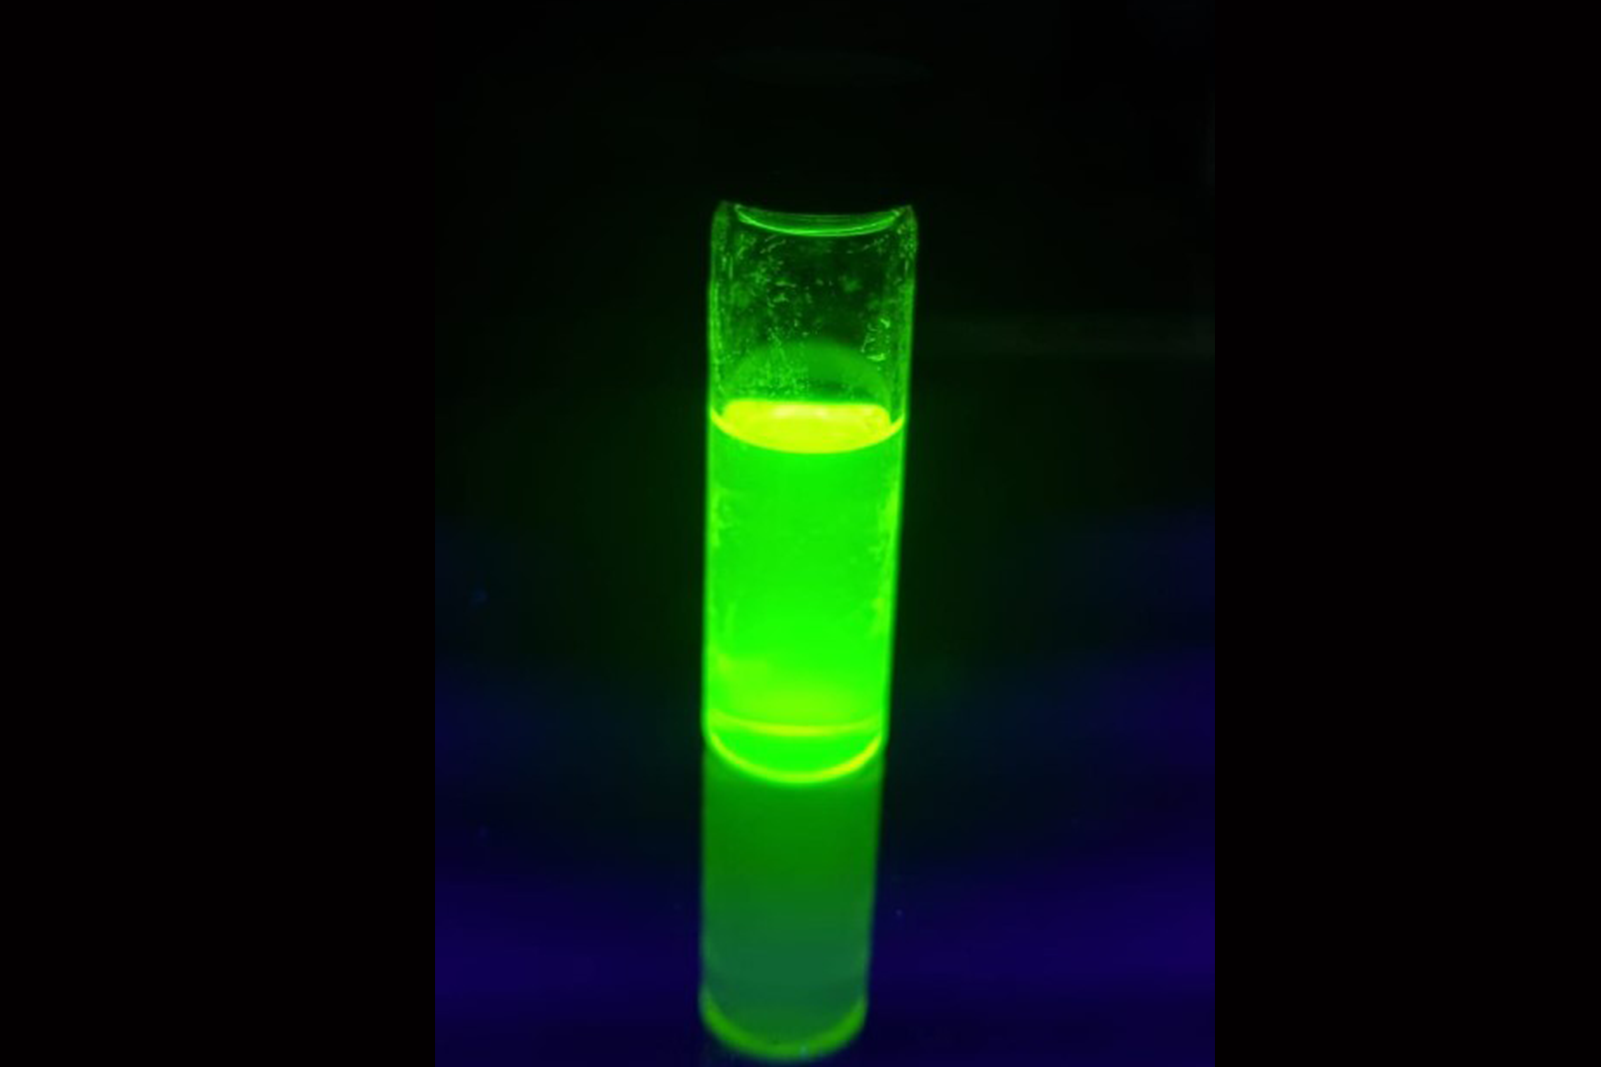  Bright Green CdSe Based Quantum Dots (Pure)